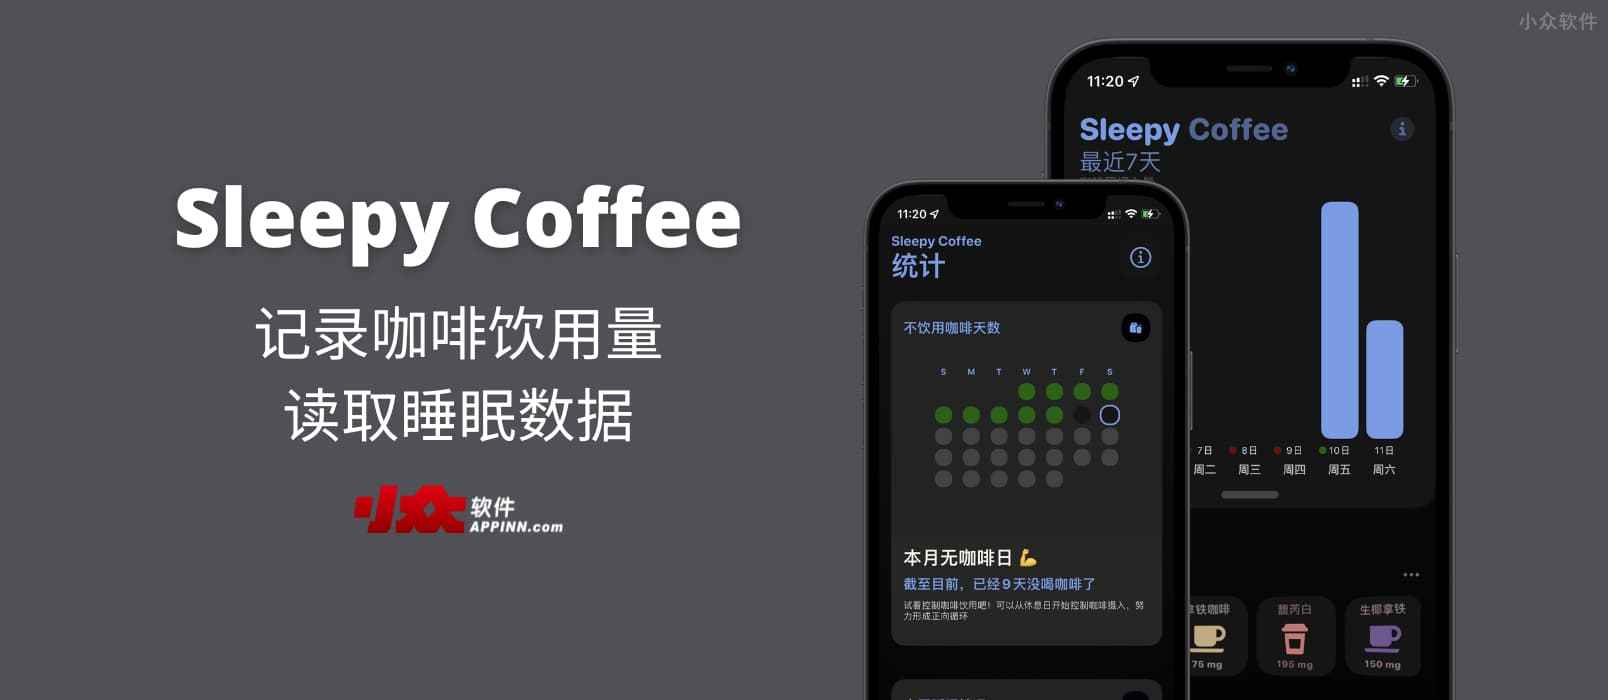 Sleepy Coffee - 记录咖啡饮用量，读取睡眠数据，揭开咖啡与睡眠的关系[iPhone]